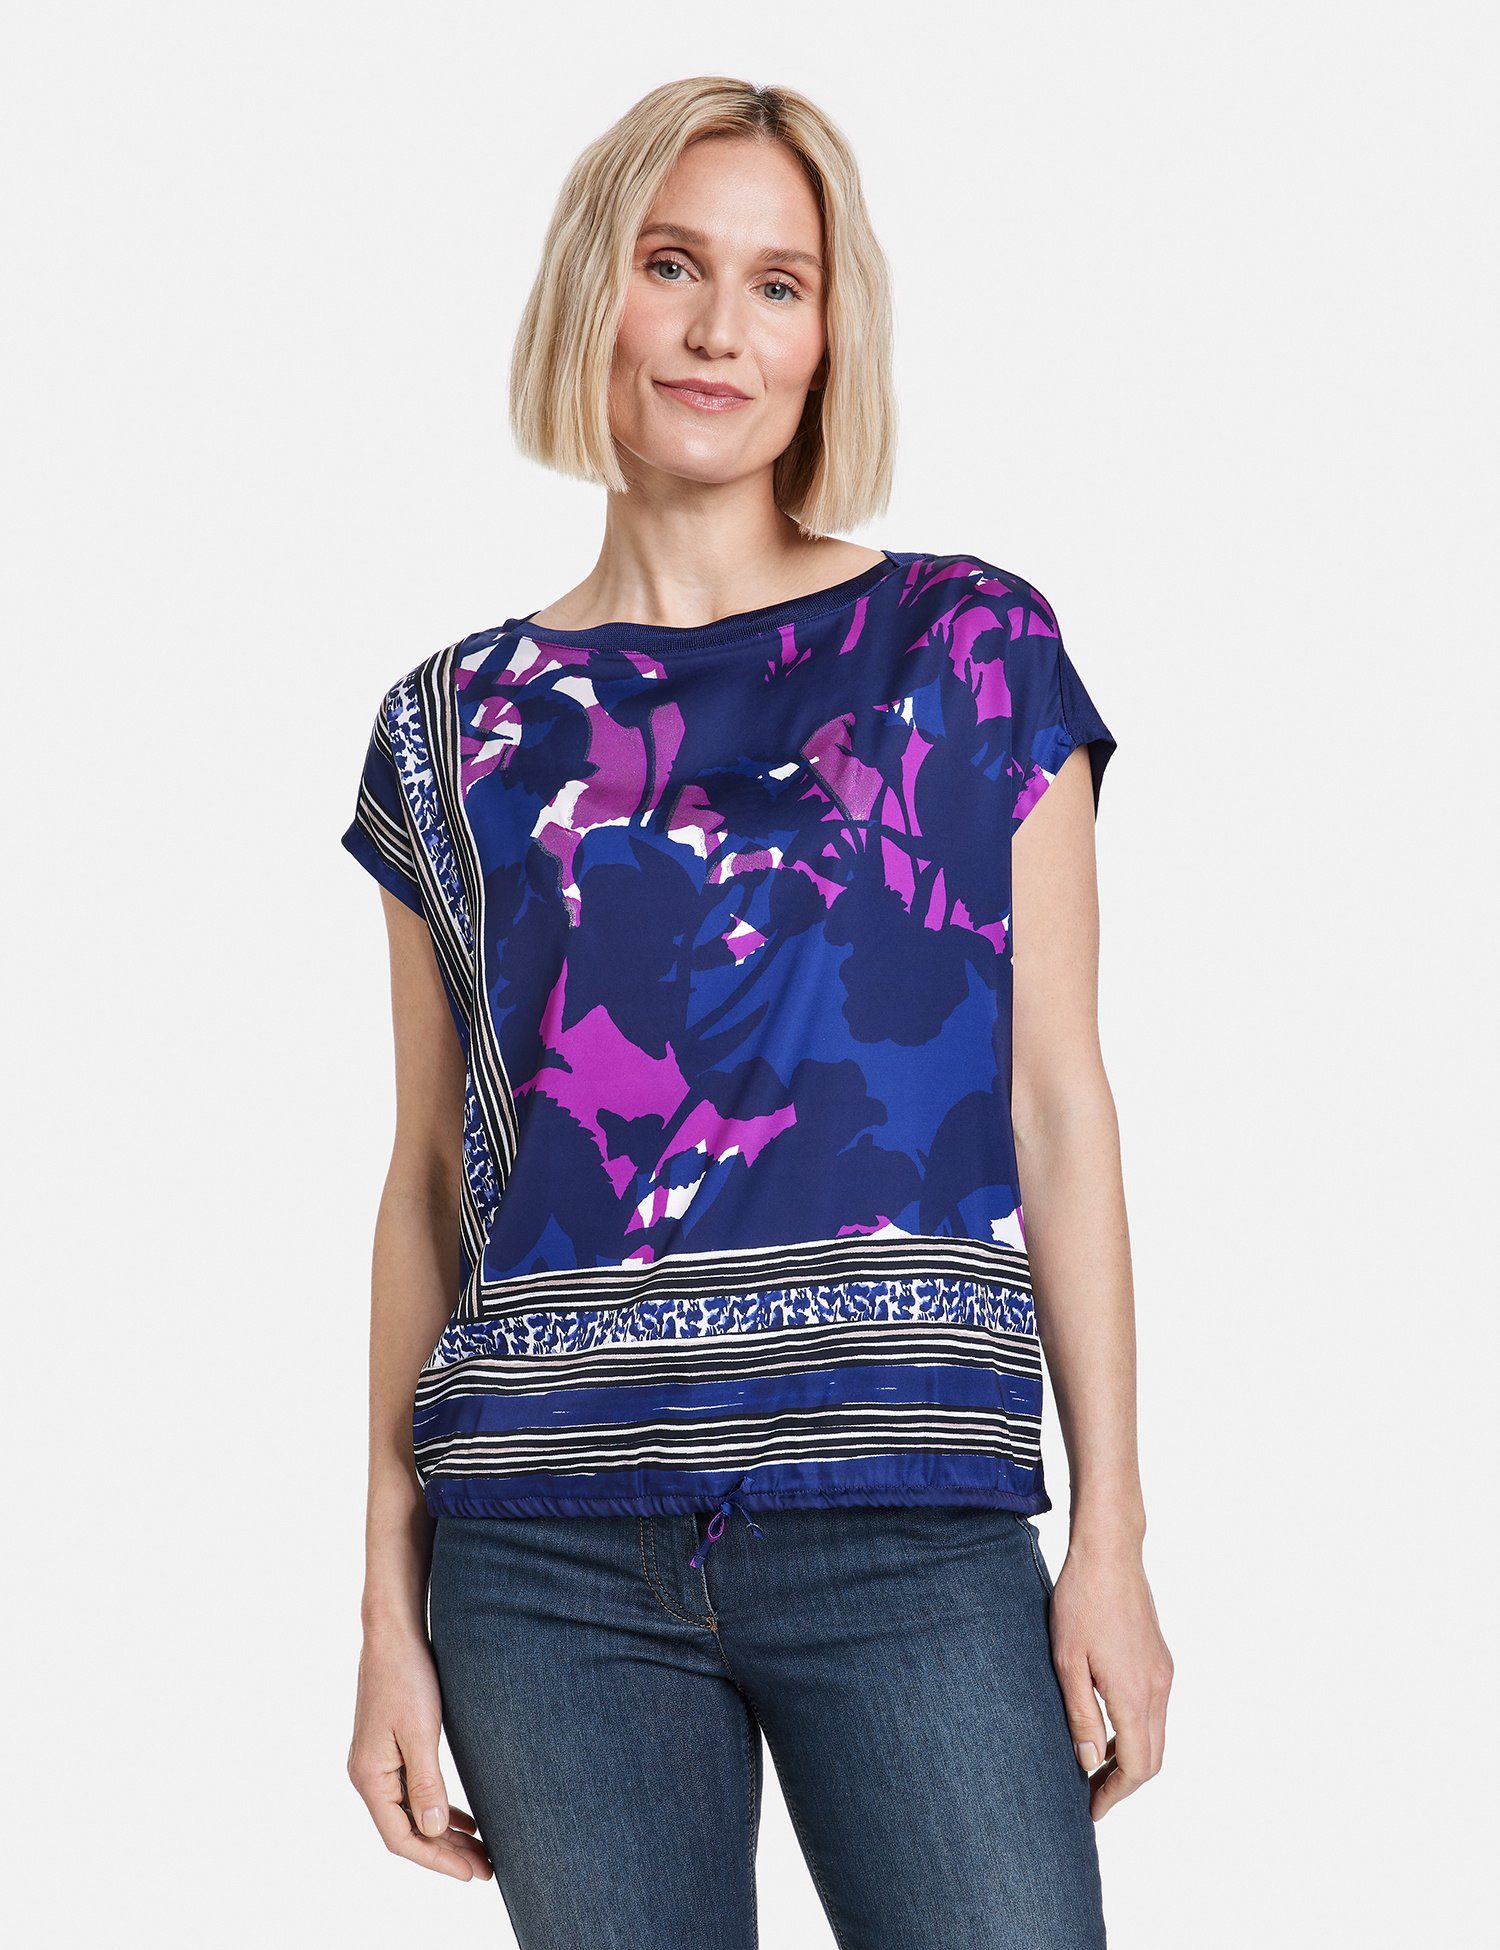 GERRY WEBER Kurzarmshirt Blusenshirt mit elastischem Saum Blau/Lila/Pink Druck